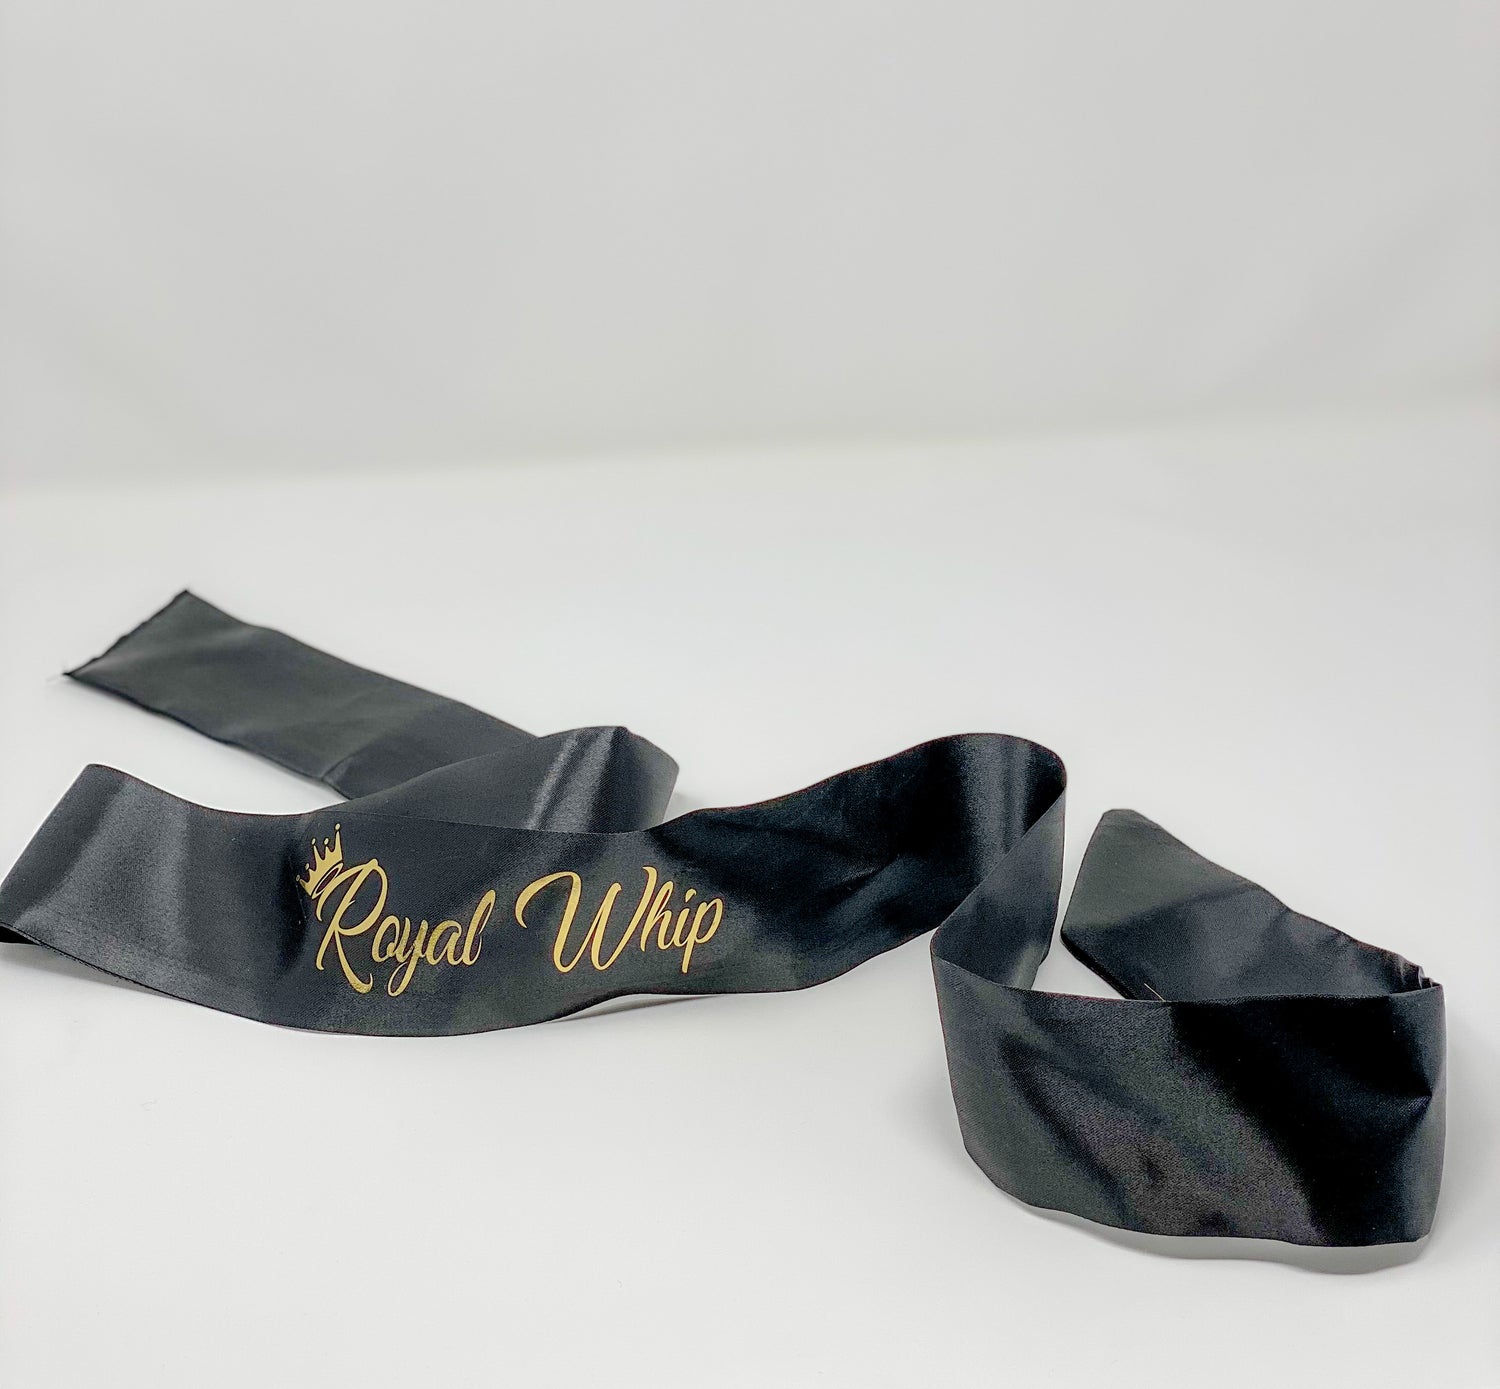 Edge Wrap – Royal Whip Luxury Salon